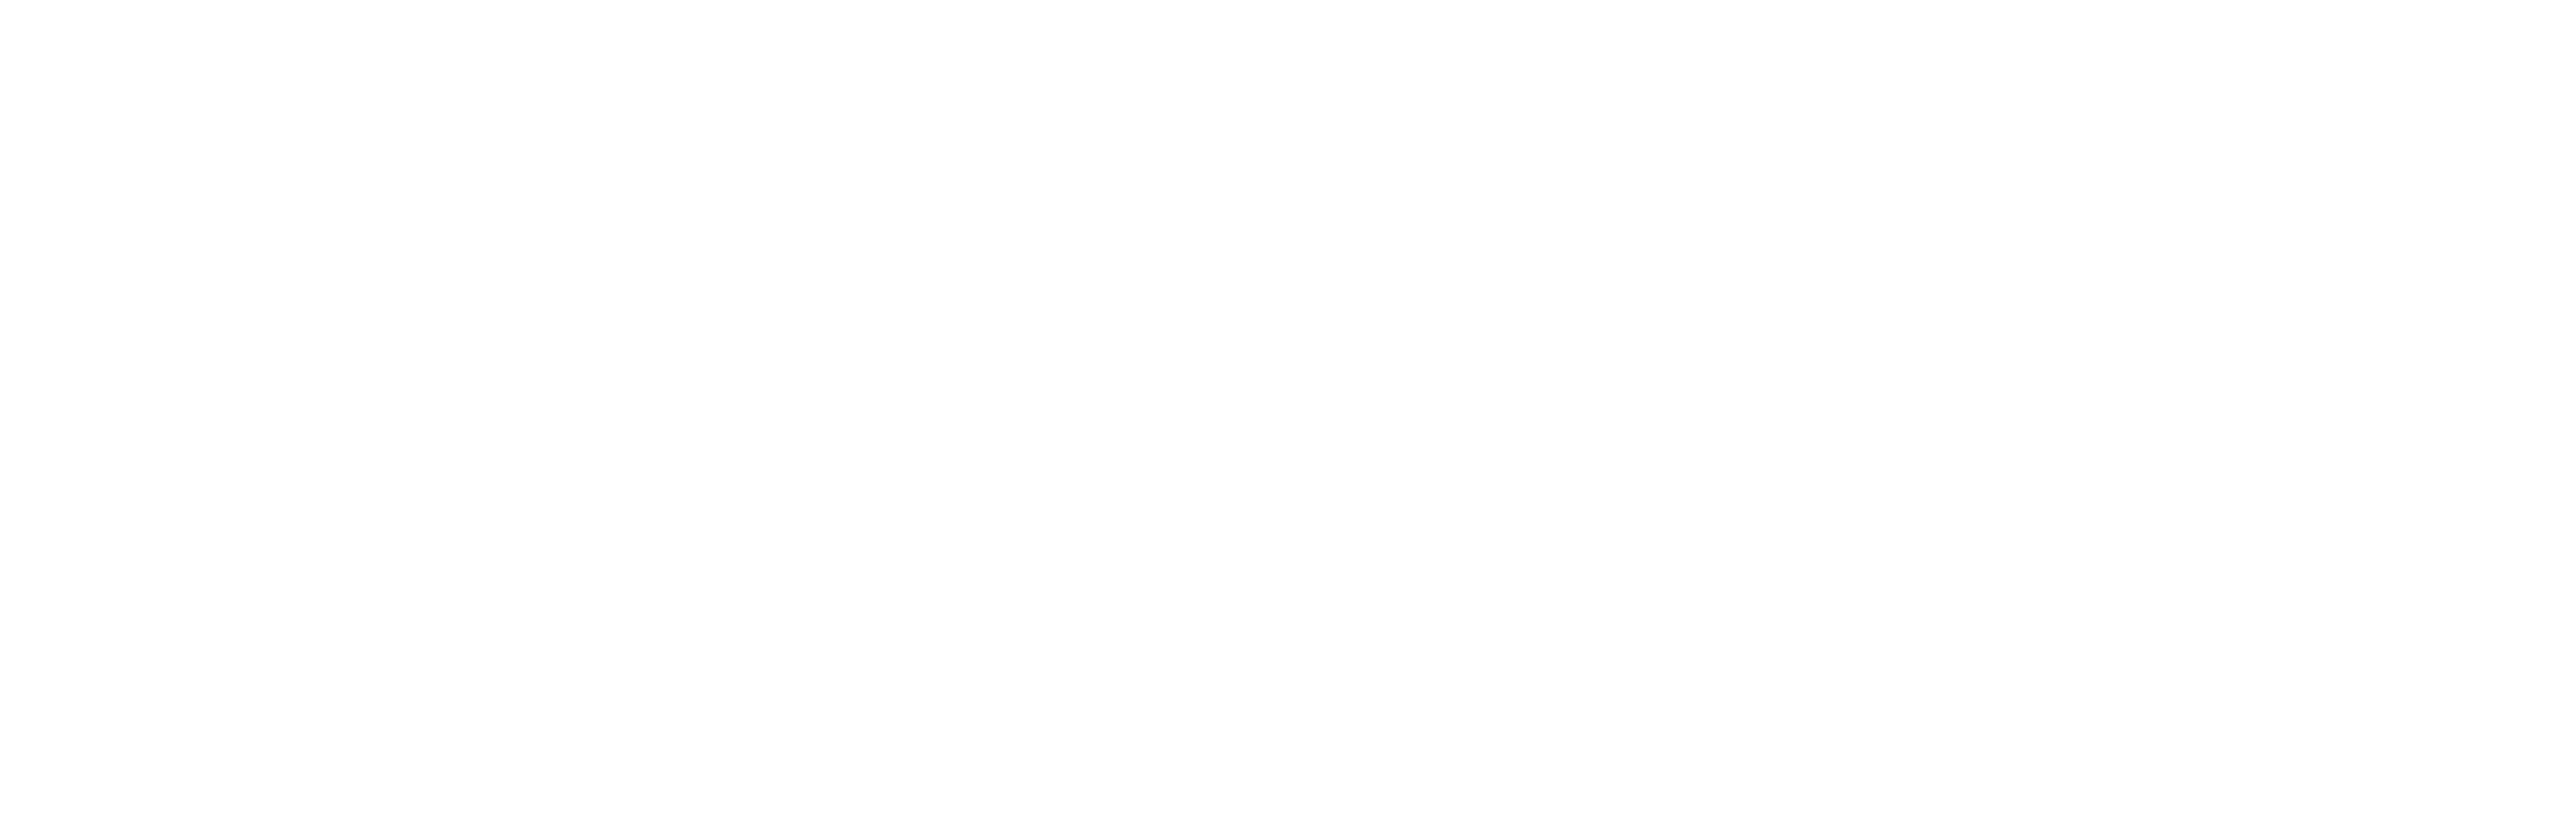 Rotaract Masterbrand Simplified - White